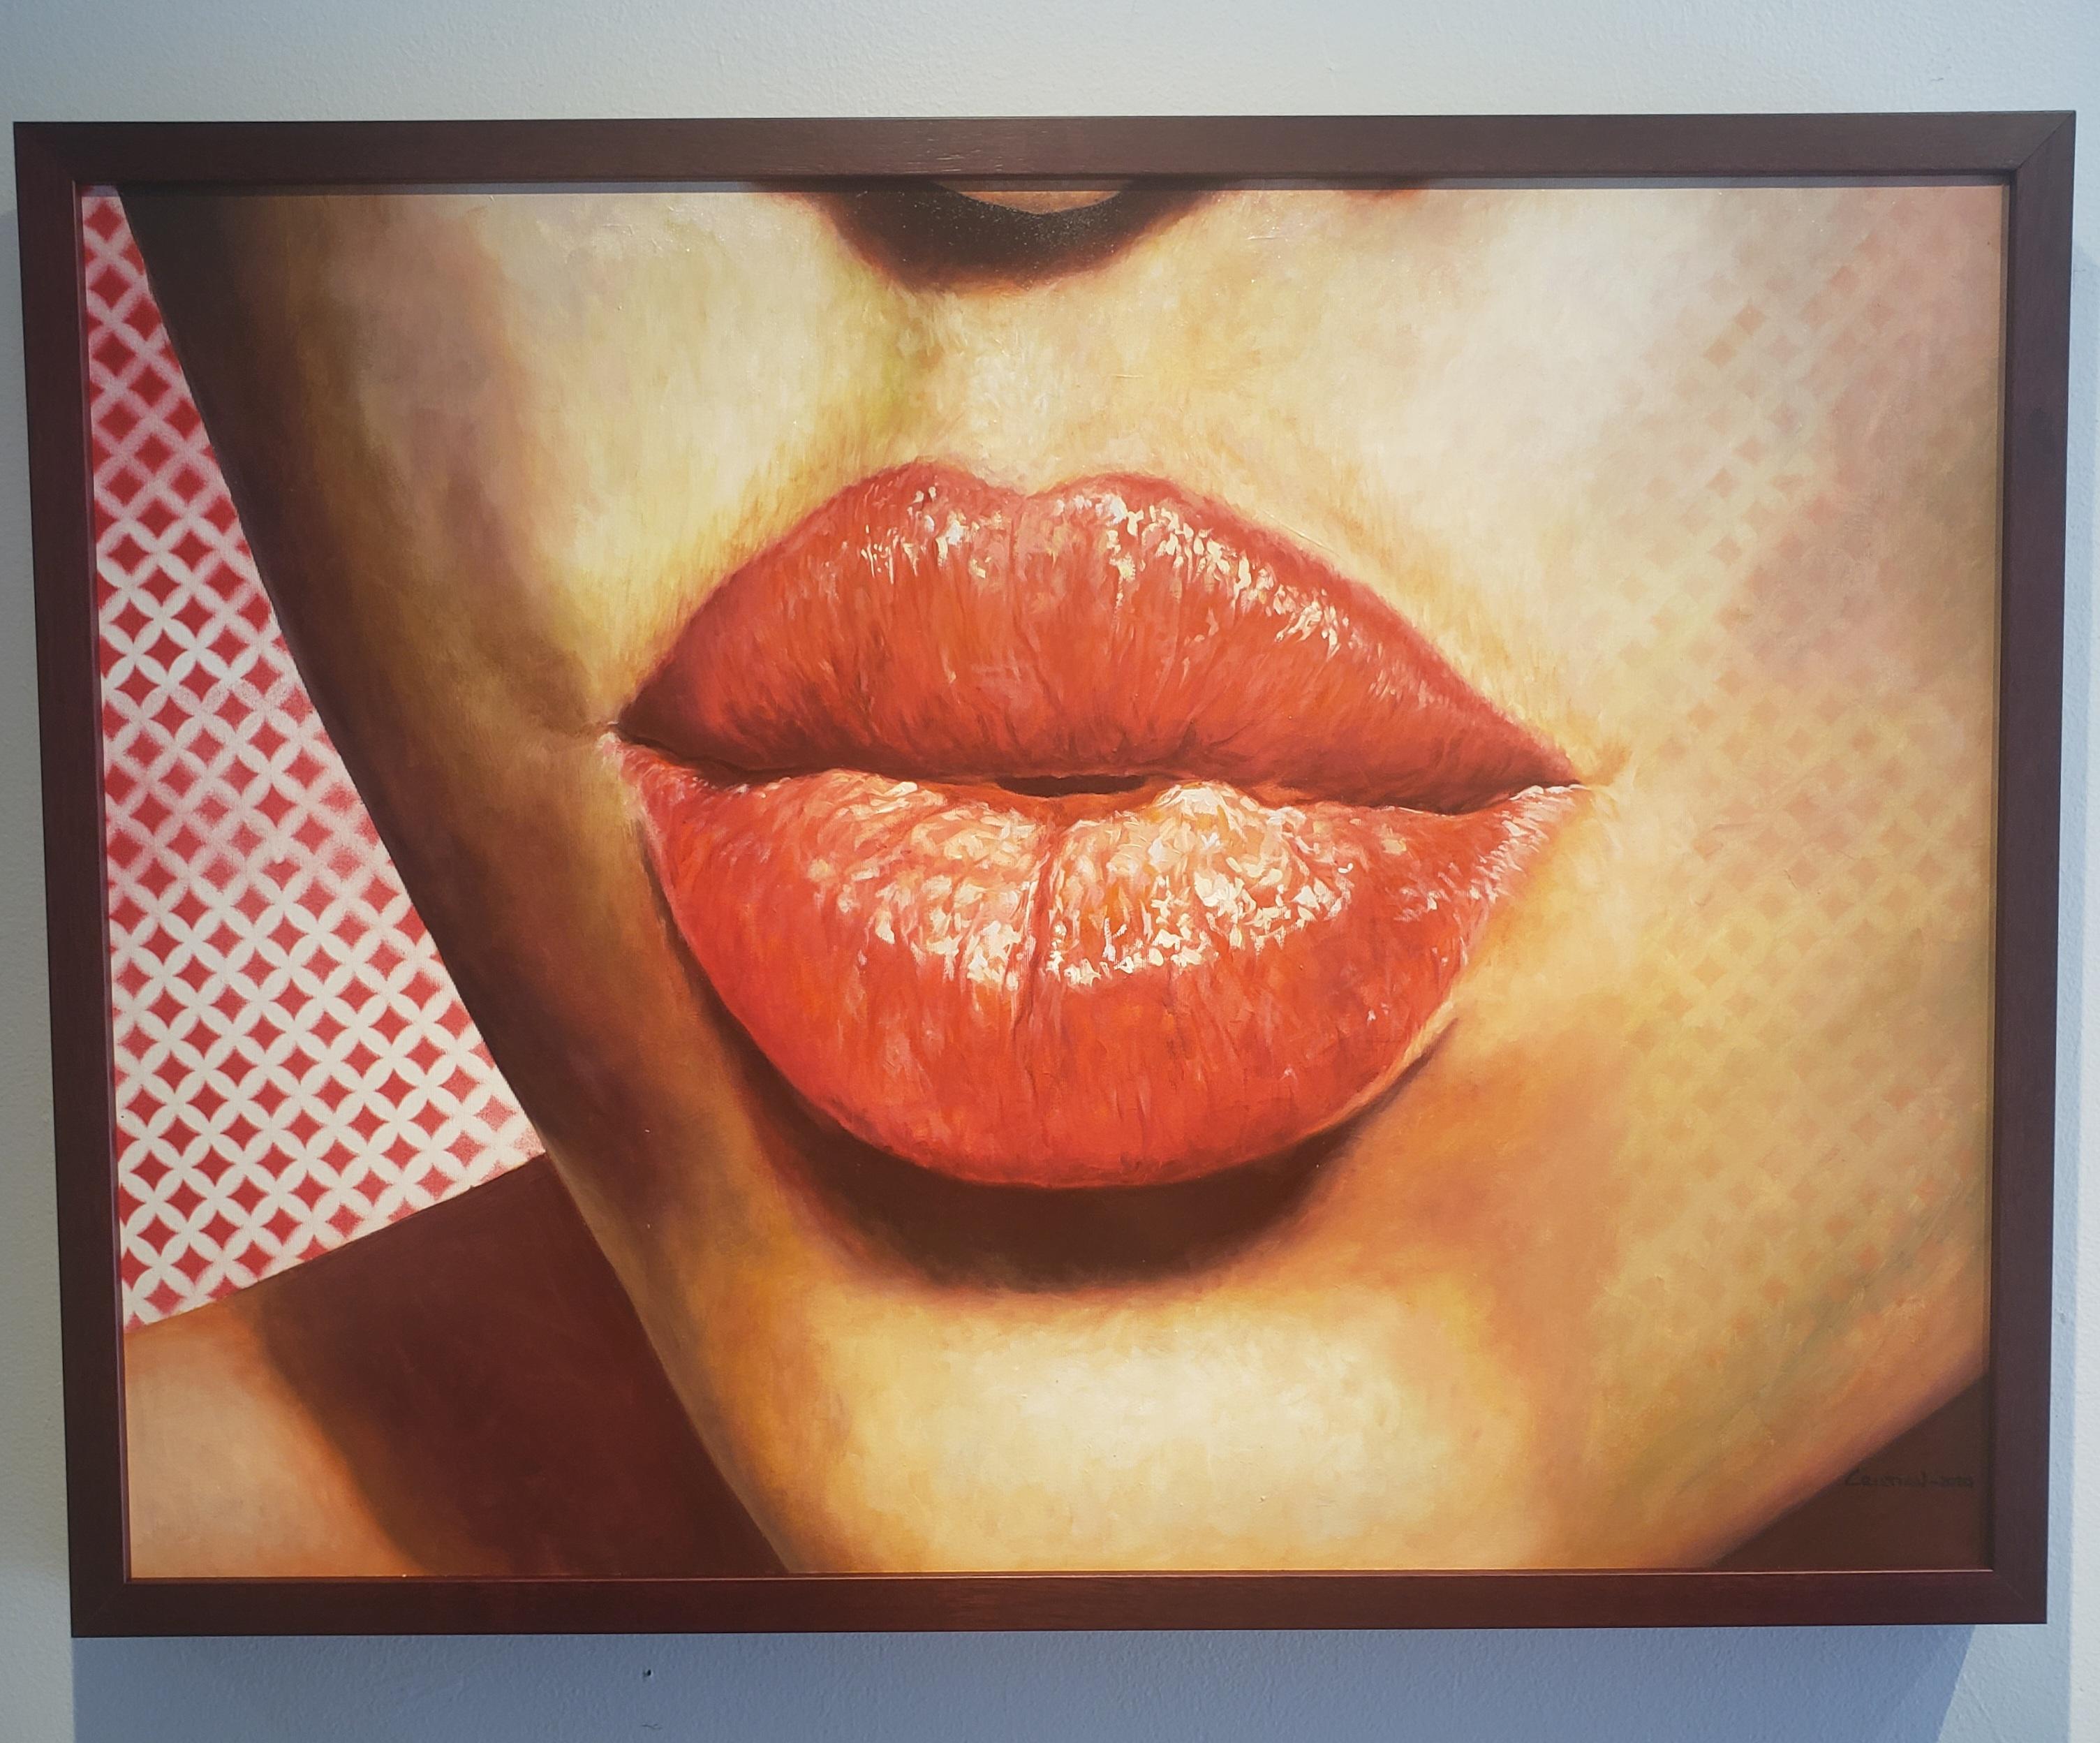 BESAME (KISS ME)  Oil on Canvas  Realism  Cuban Art  Emerging Artist  Framed - Painting by Cristian Mesa Velazquez